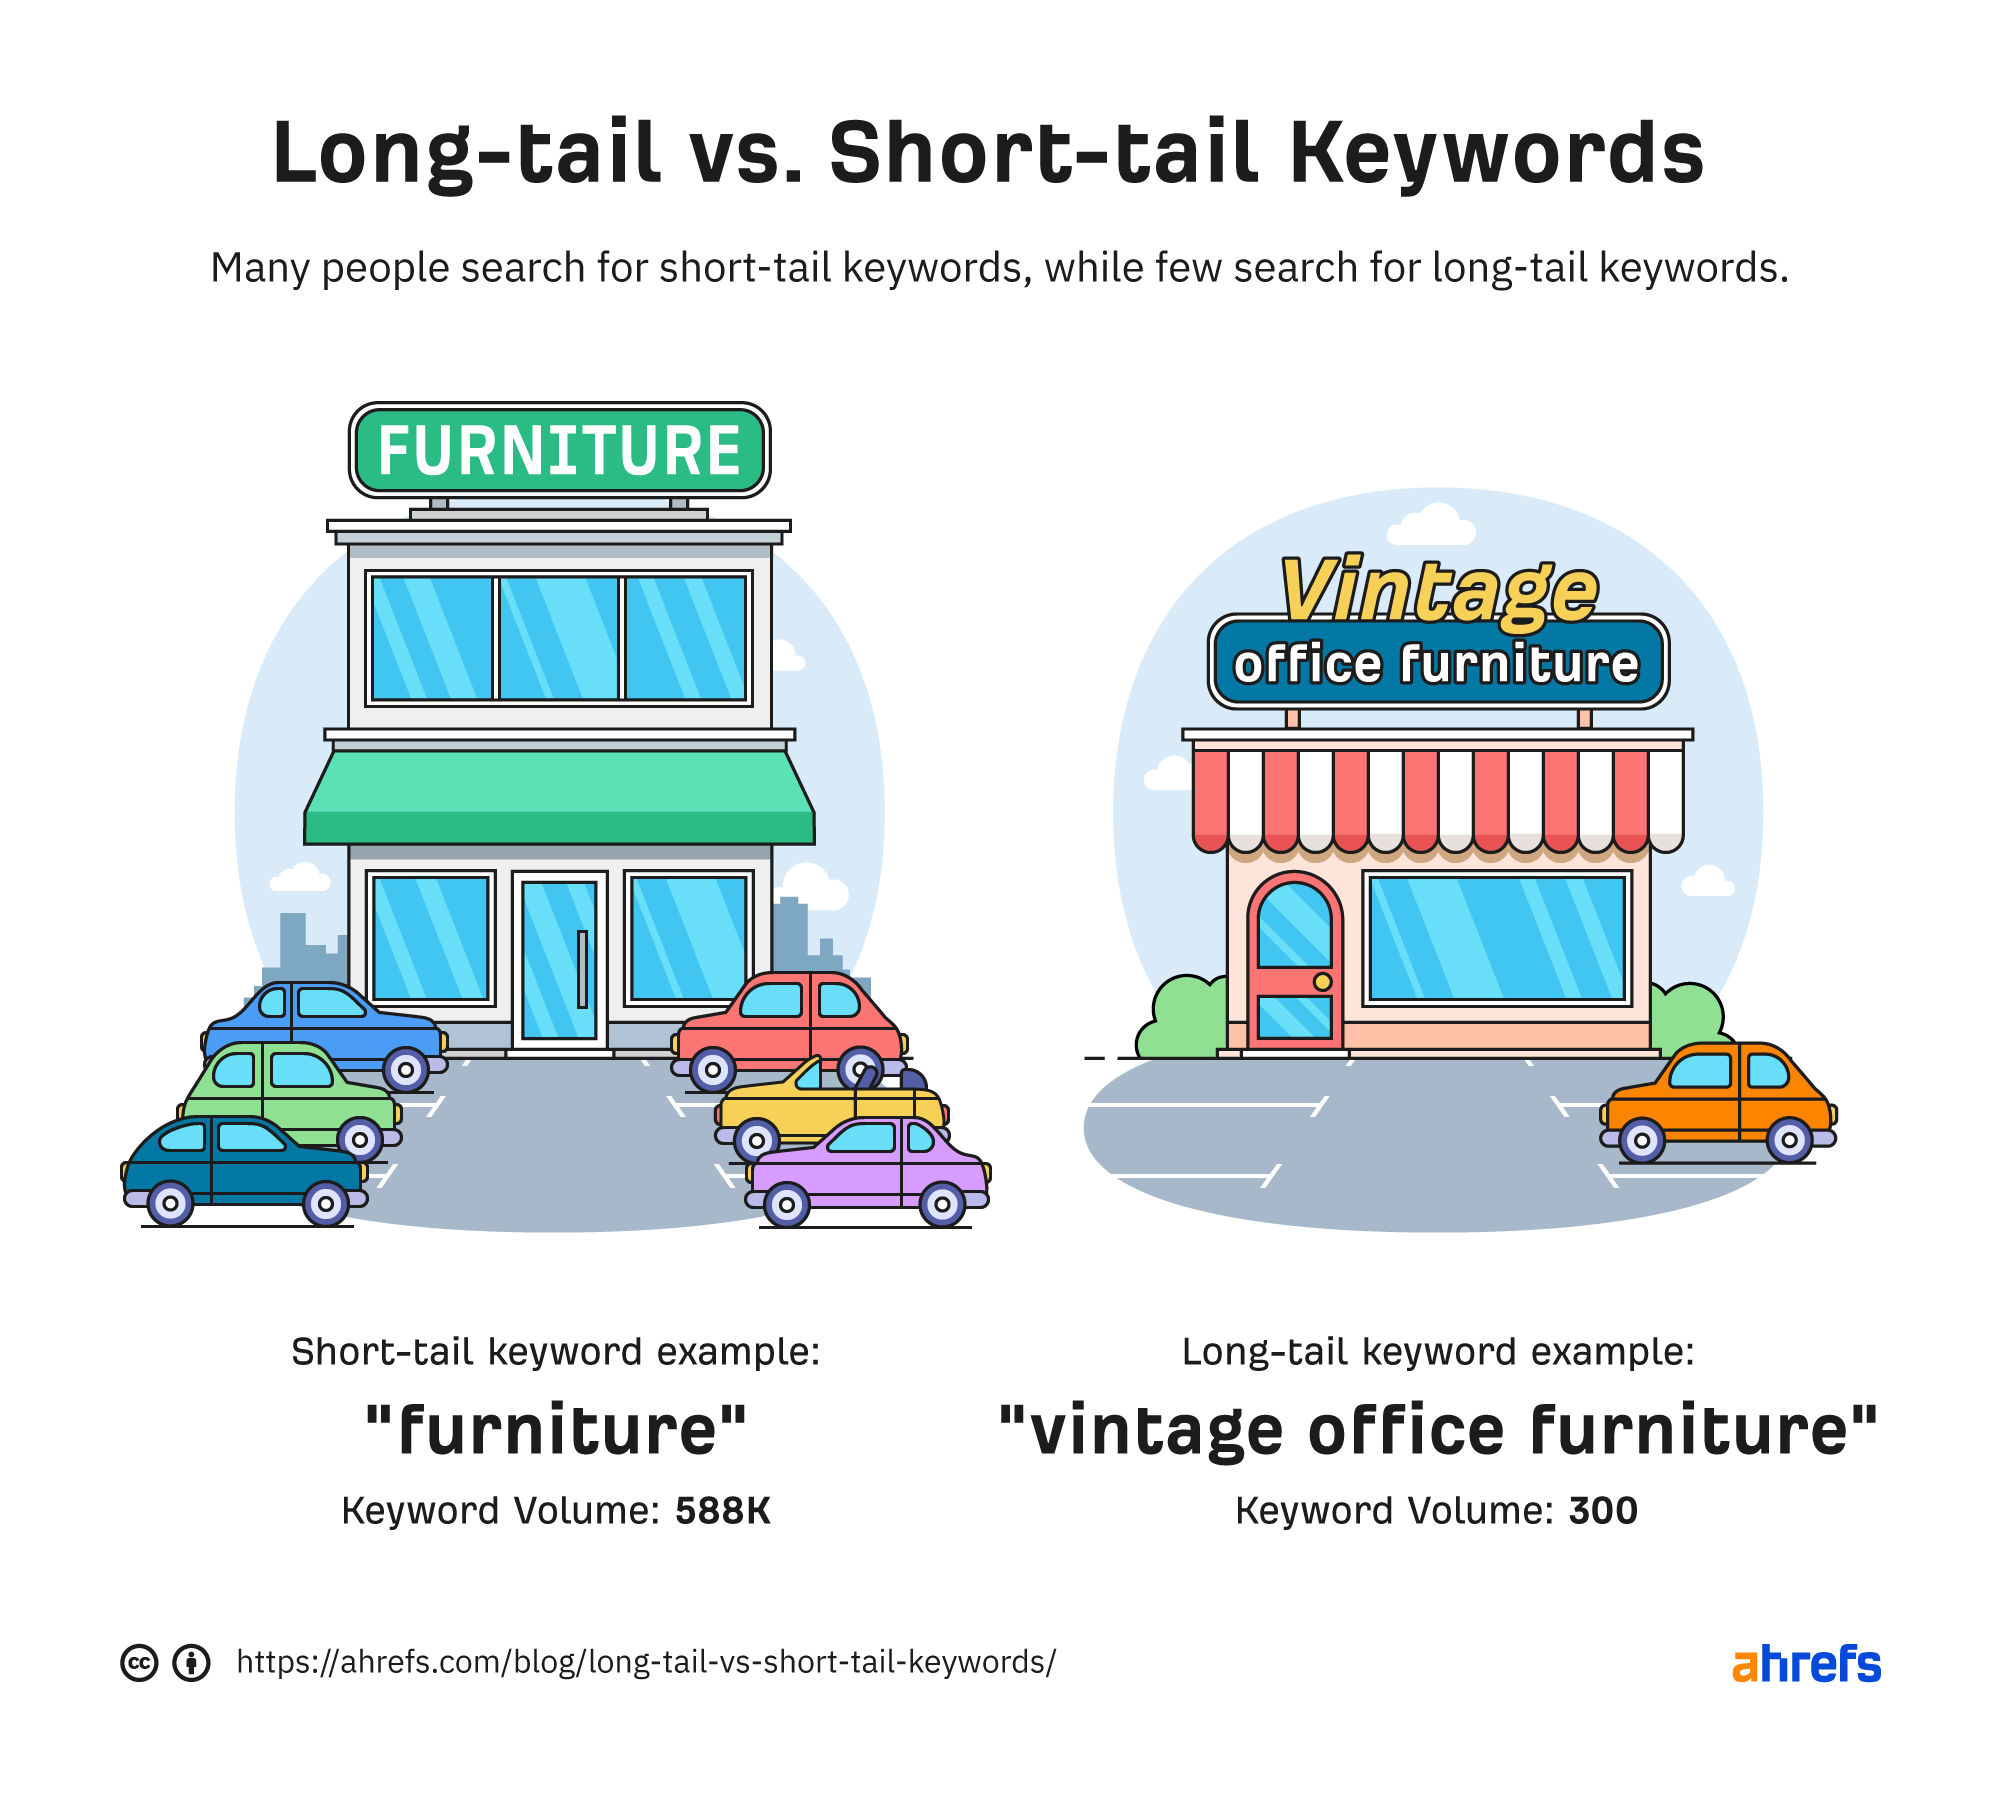 Long-tail vs. short-tail keywords